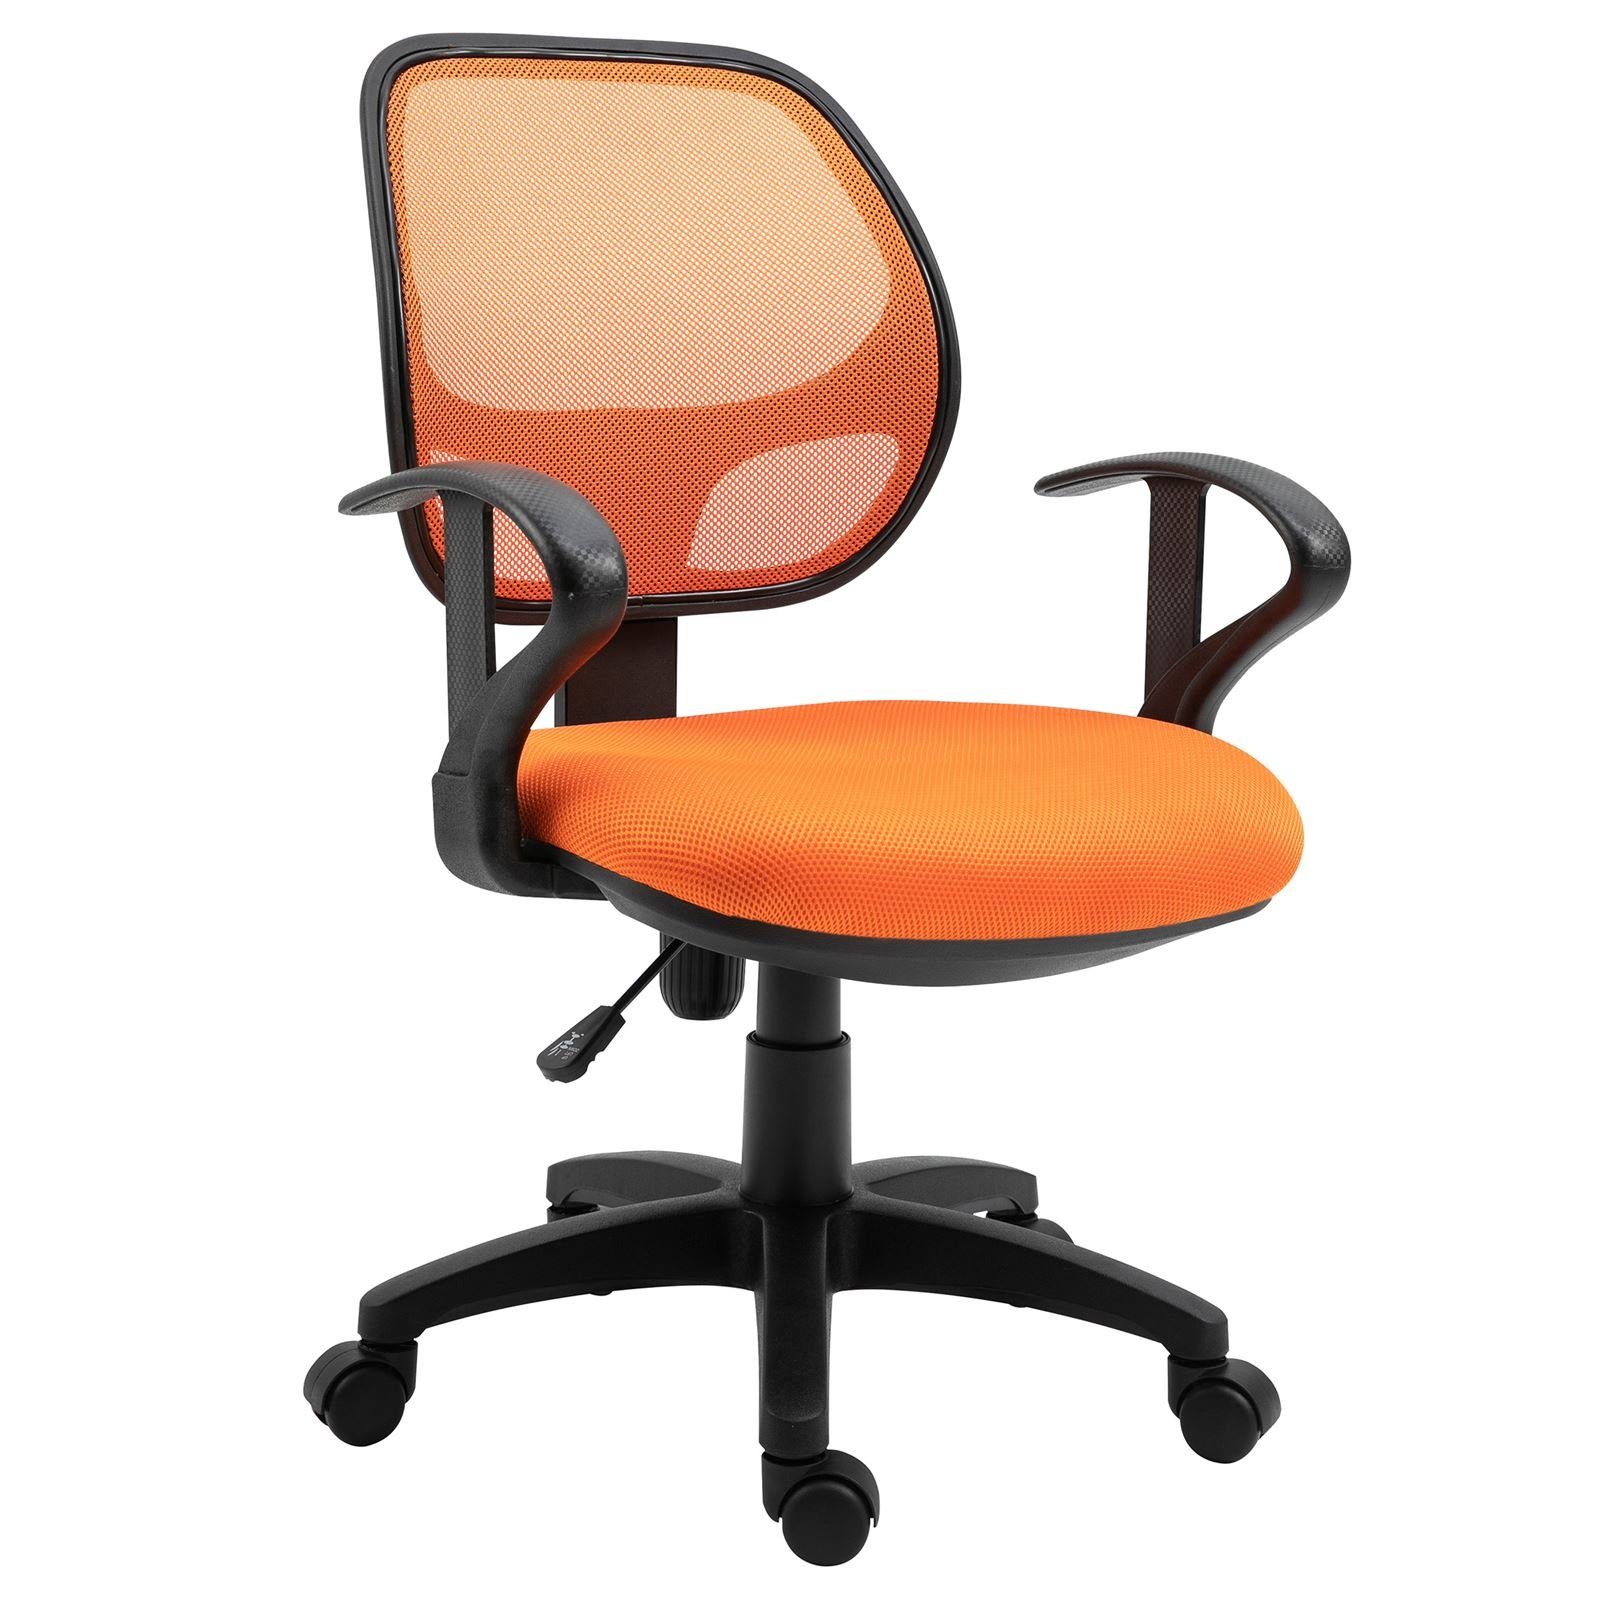 IDIMEX Drehstuhl COOL, Kinderdrehstuhl Schreibtischstuhl Drehstuhl atmungsaktiver Bezug Farba orange